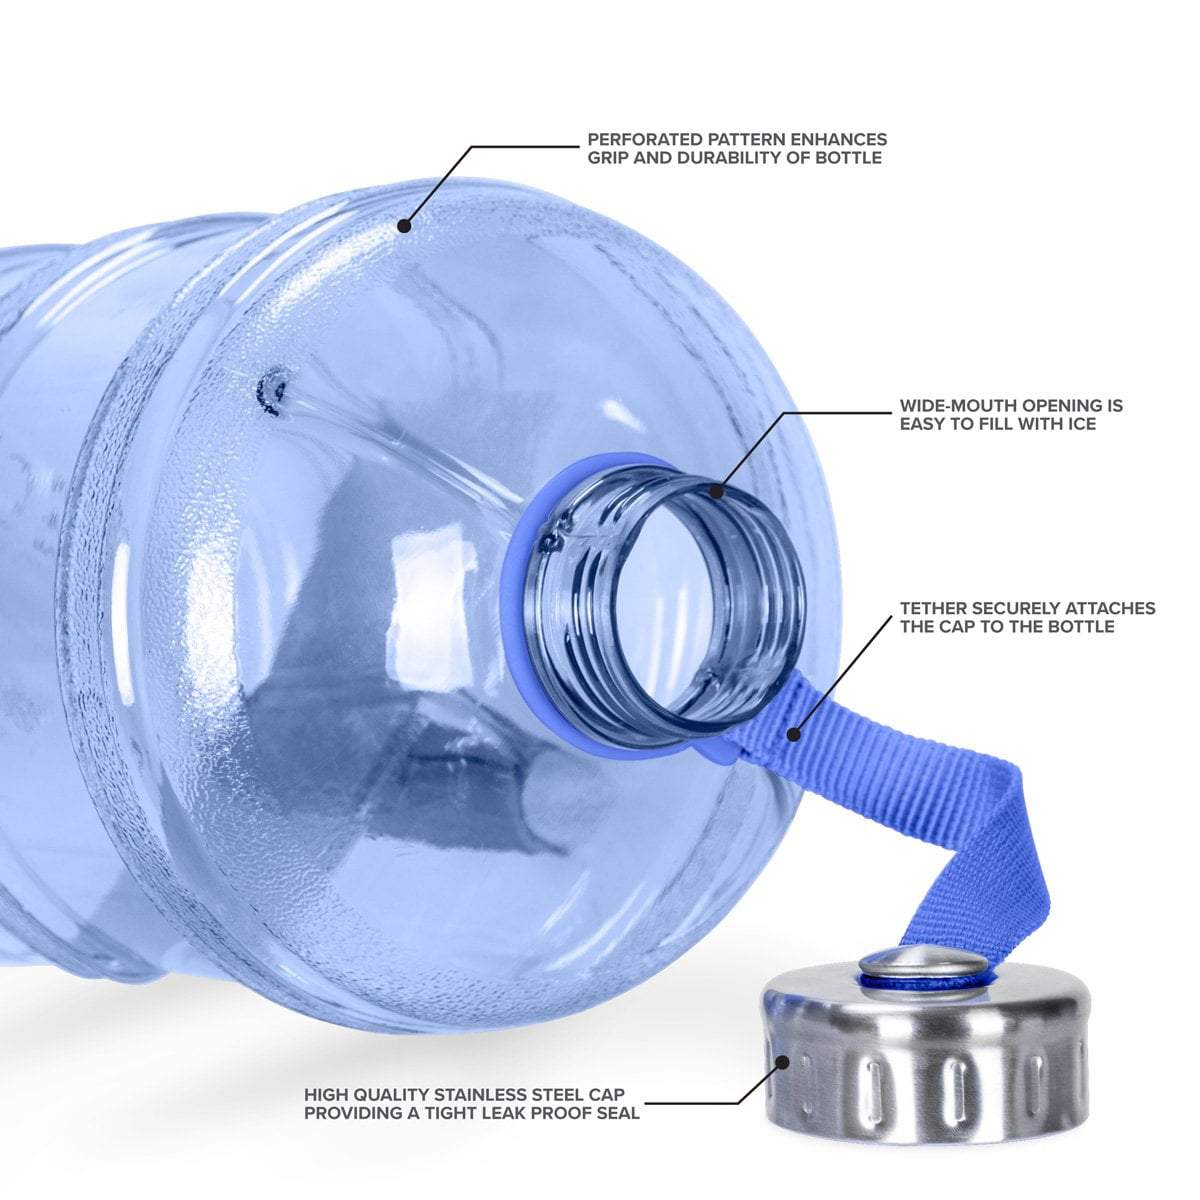 Stainless Steel BPA Free Water Bottle